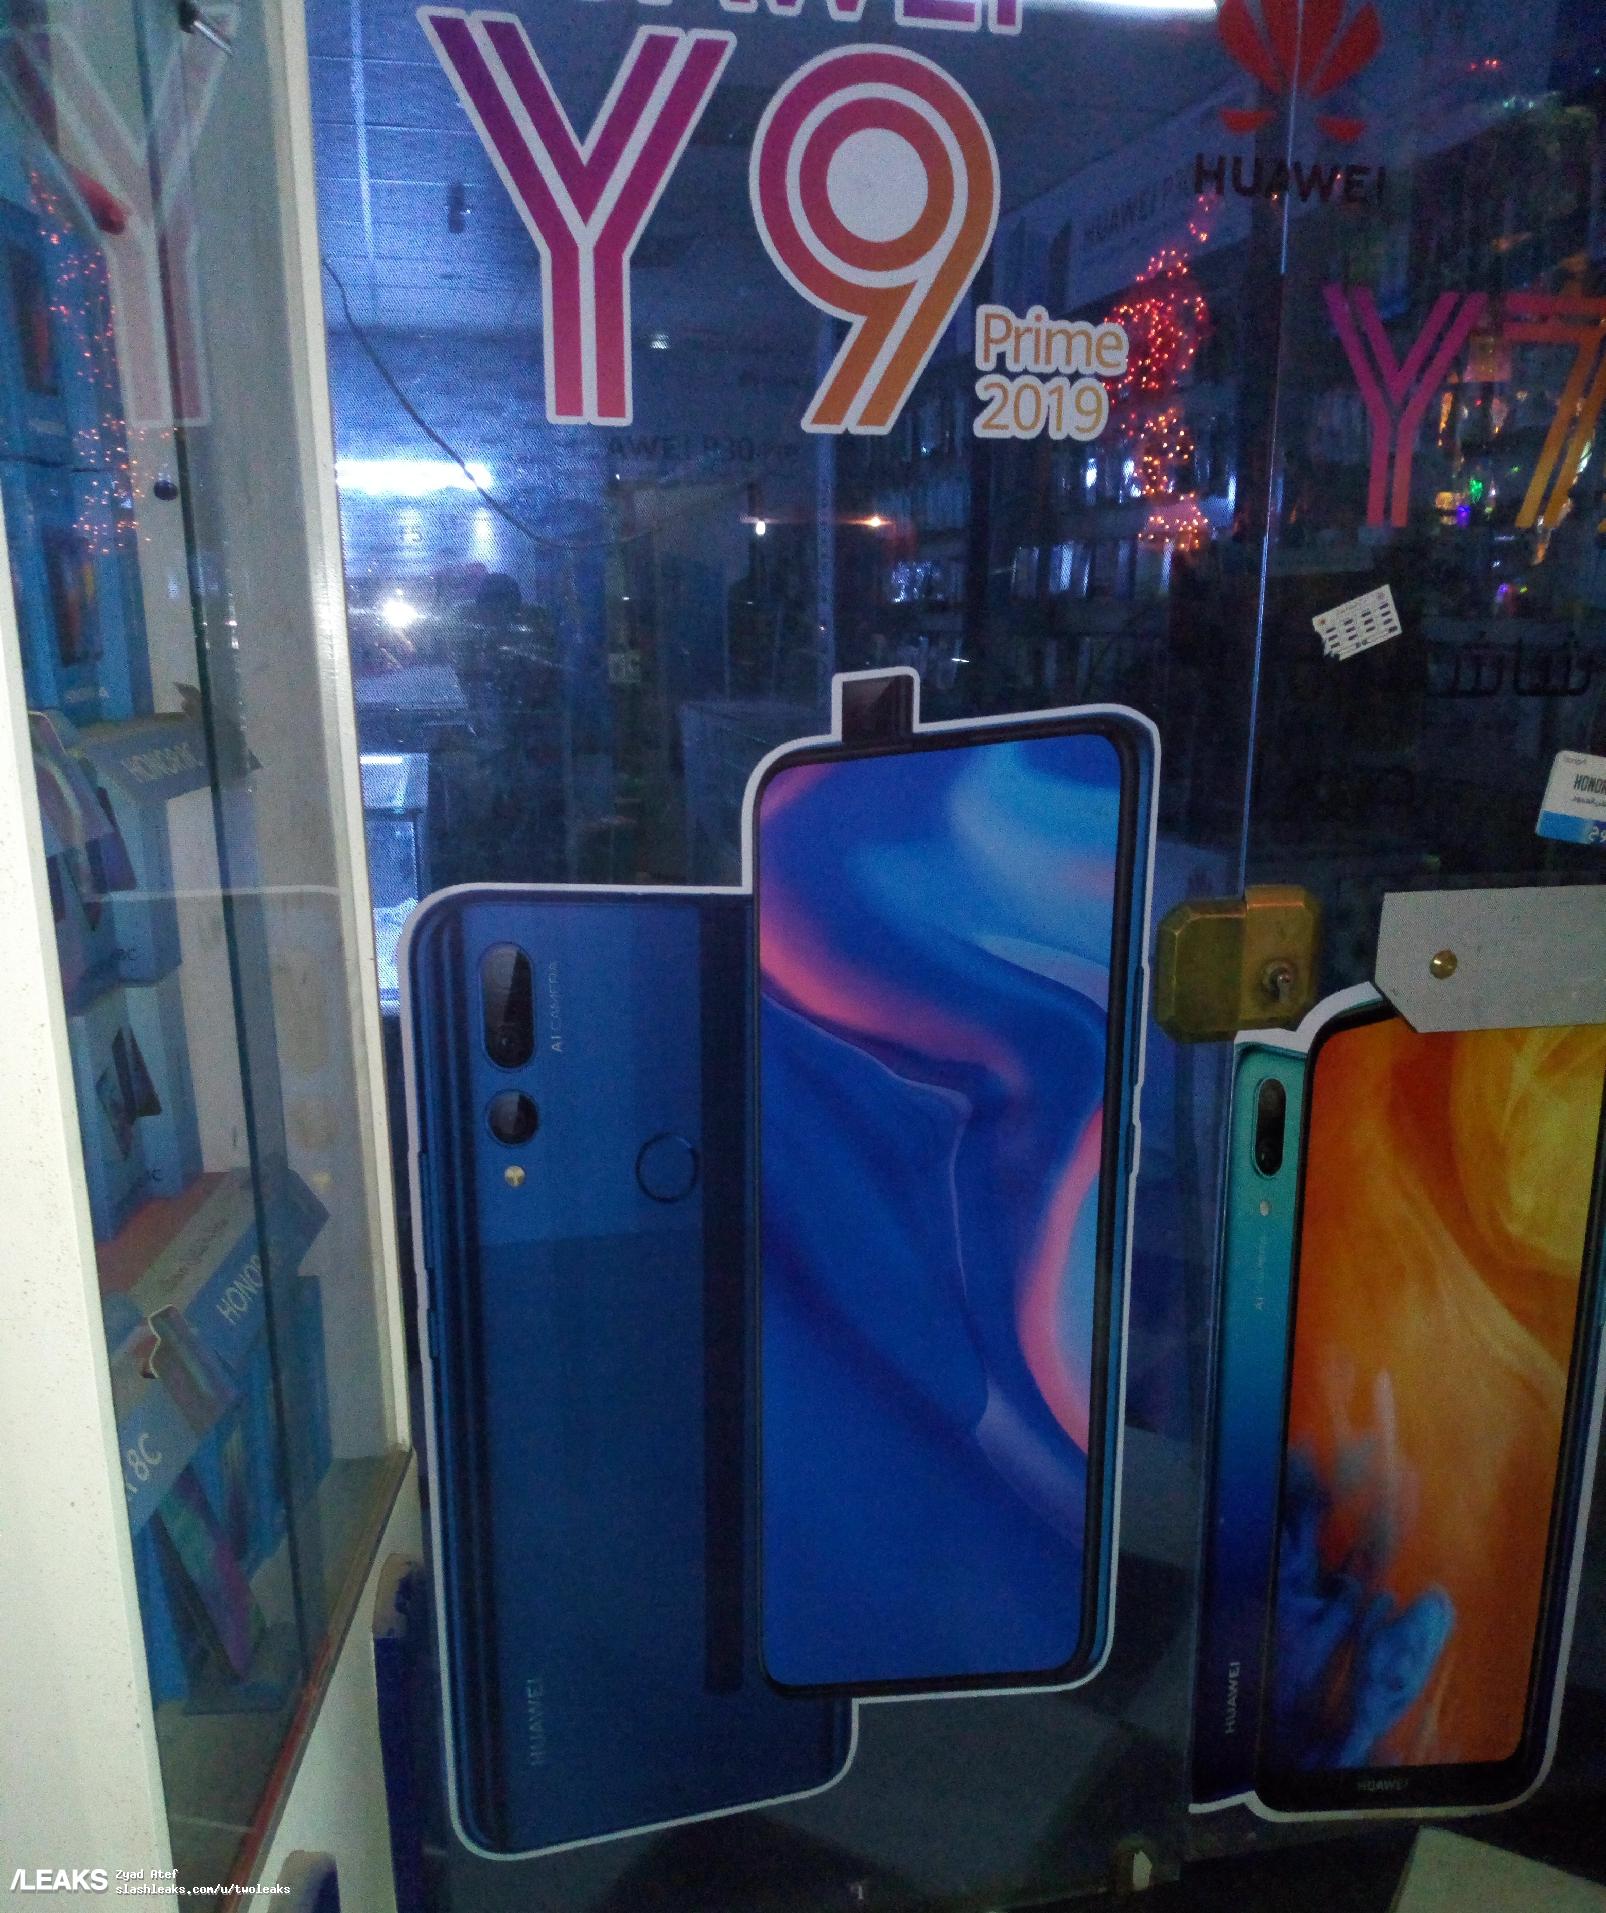 Huawei Y9 Prime 2019 poster